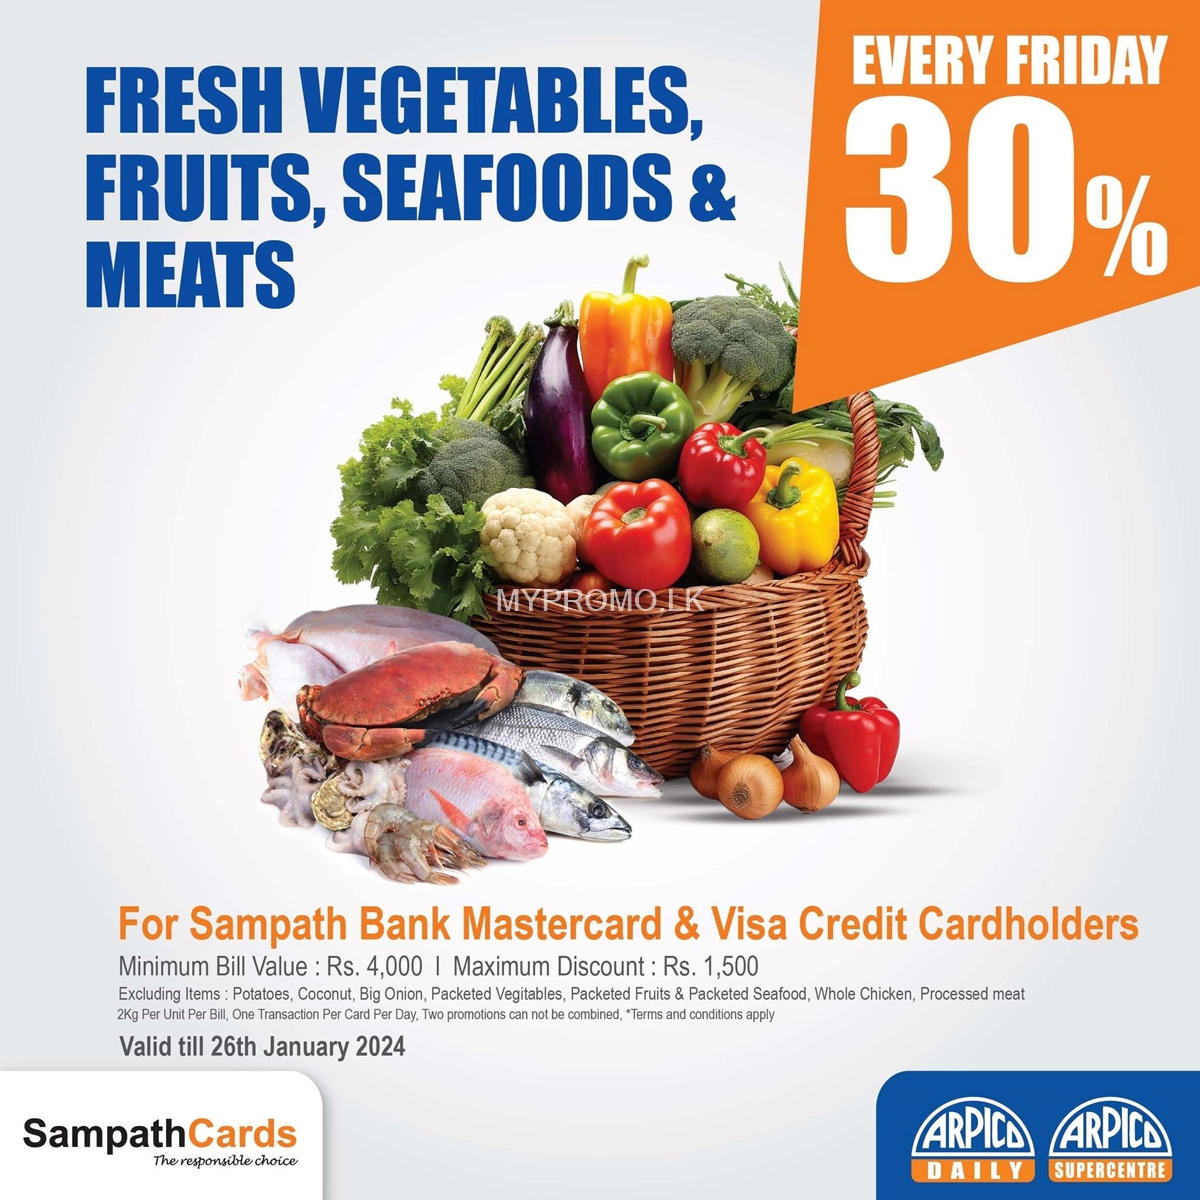 Enjoy 30% savings on fruits, vegetables, seafood and Meat at Arpico Super Centre For Sampath Credit Cards